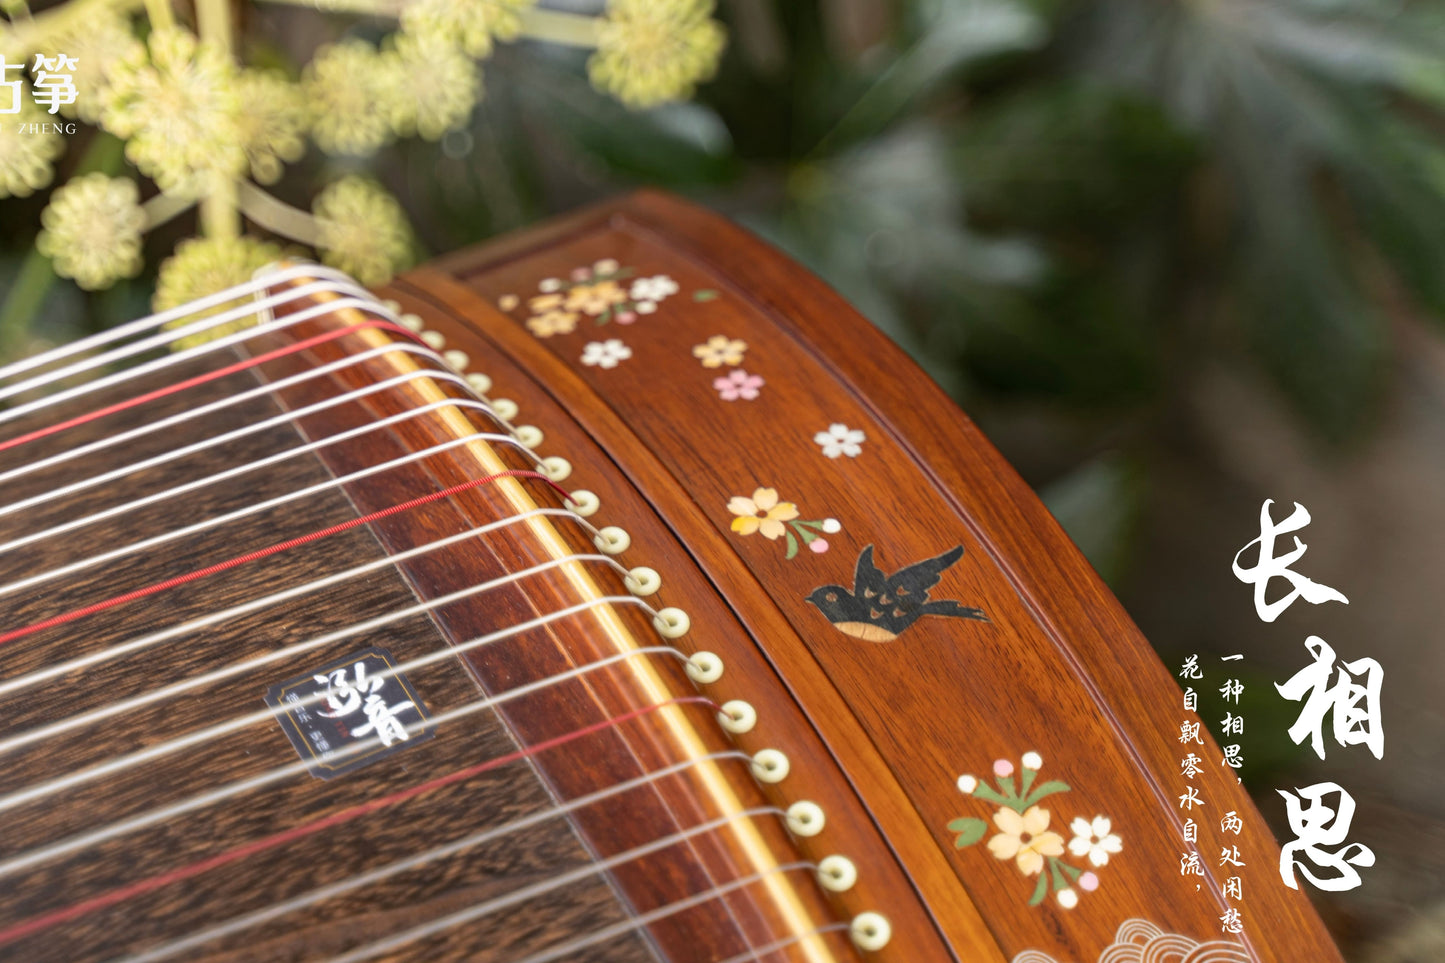 Chinese music store - premium travel-size guzheng carefully-picked by Guzheng expert Qing Du, guzheng lessons near me, 高性价比便携古筝, 小古筝, 买古筝, 学古筝, 古筝老师